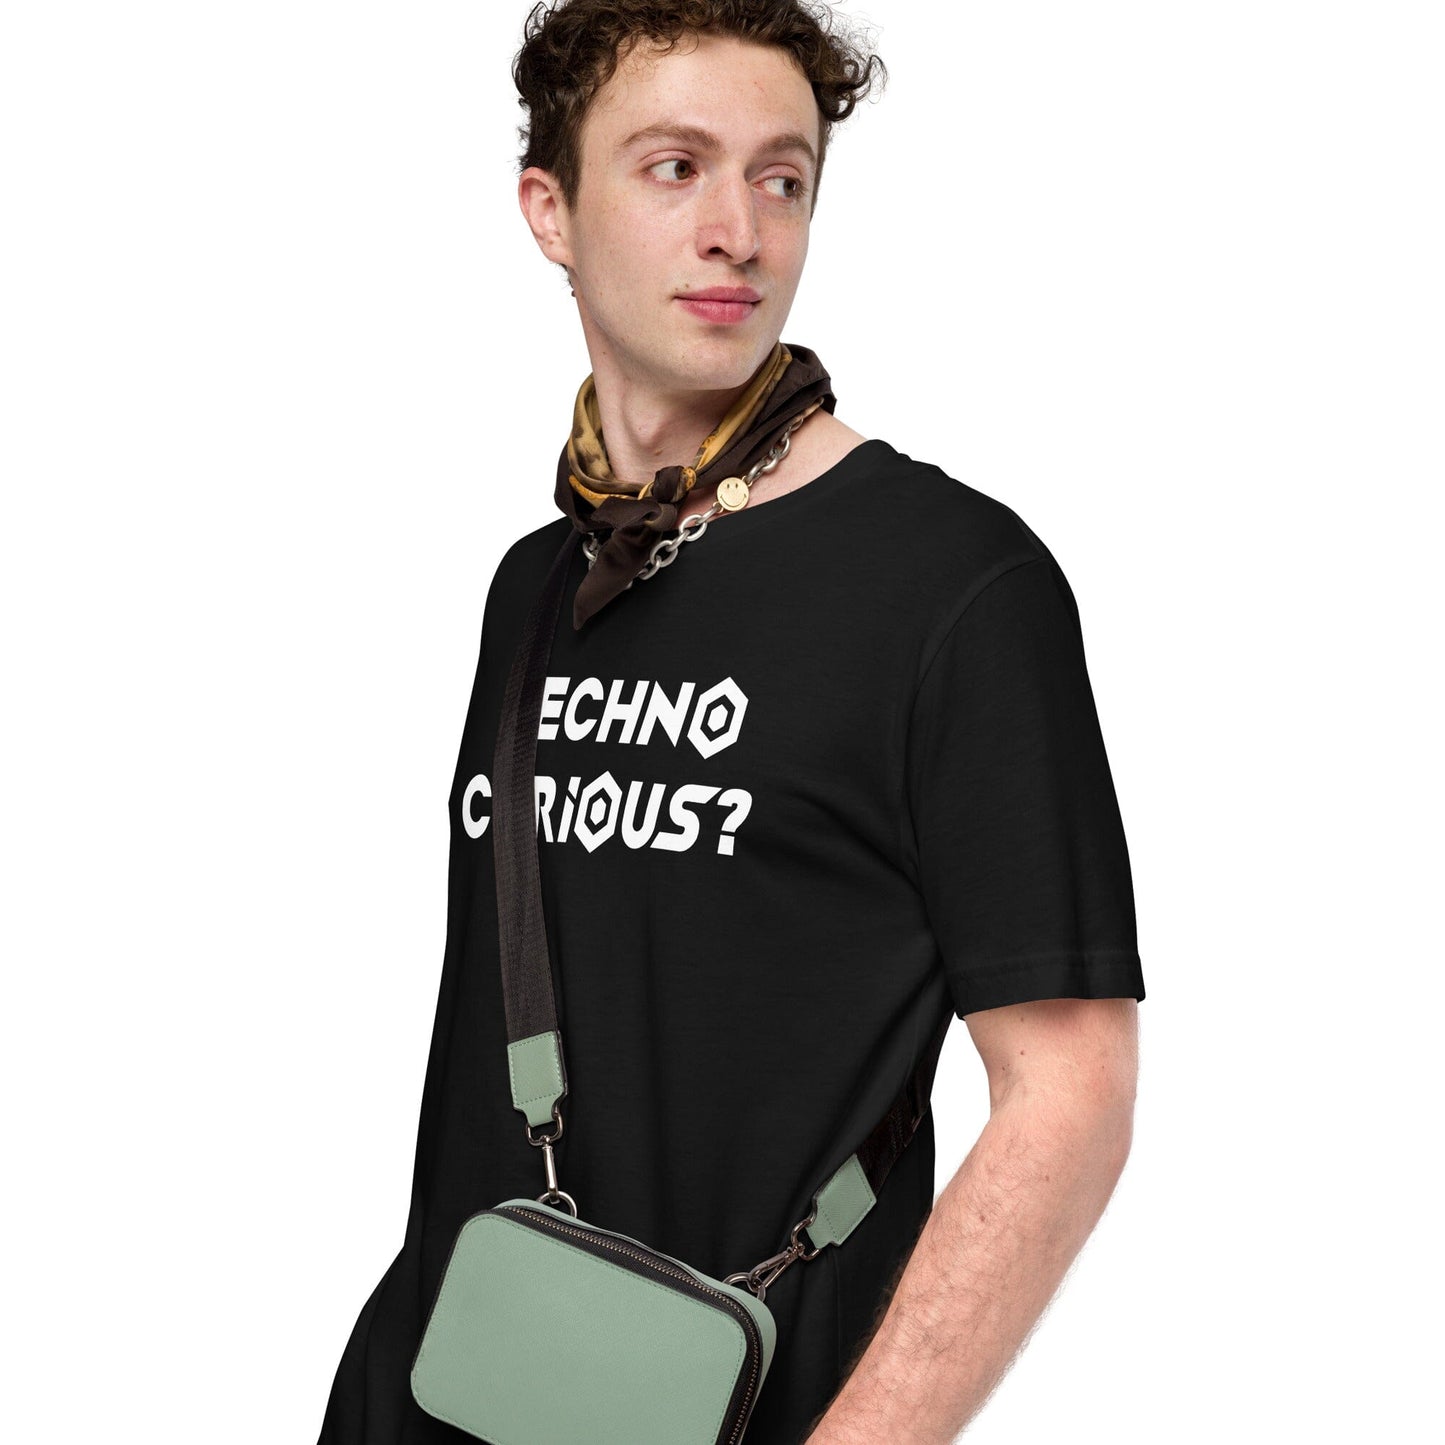 Techno Curious T-Shirt PLURTHLINGS 